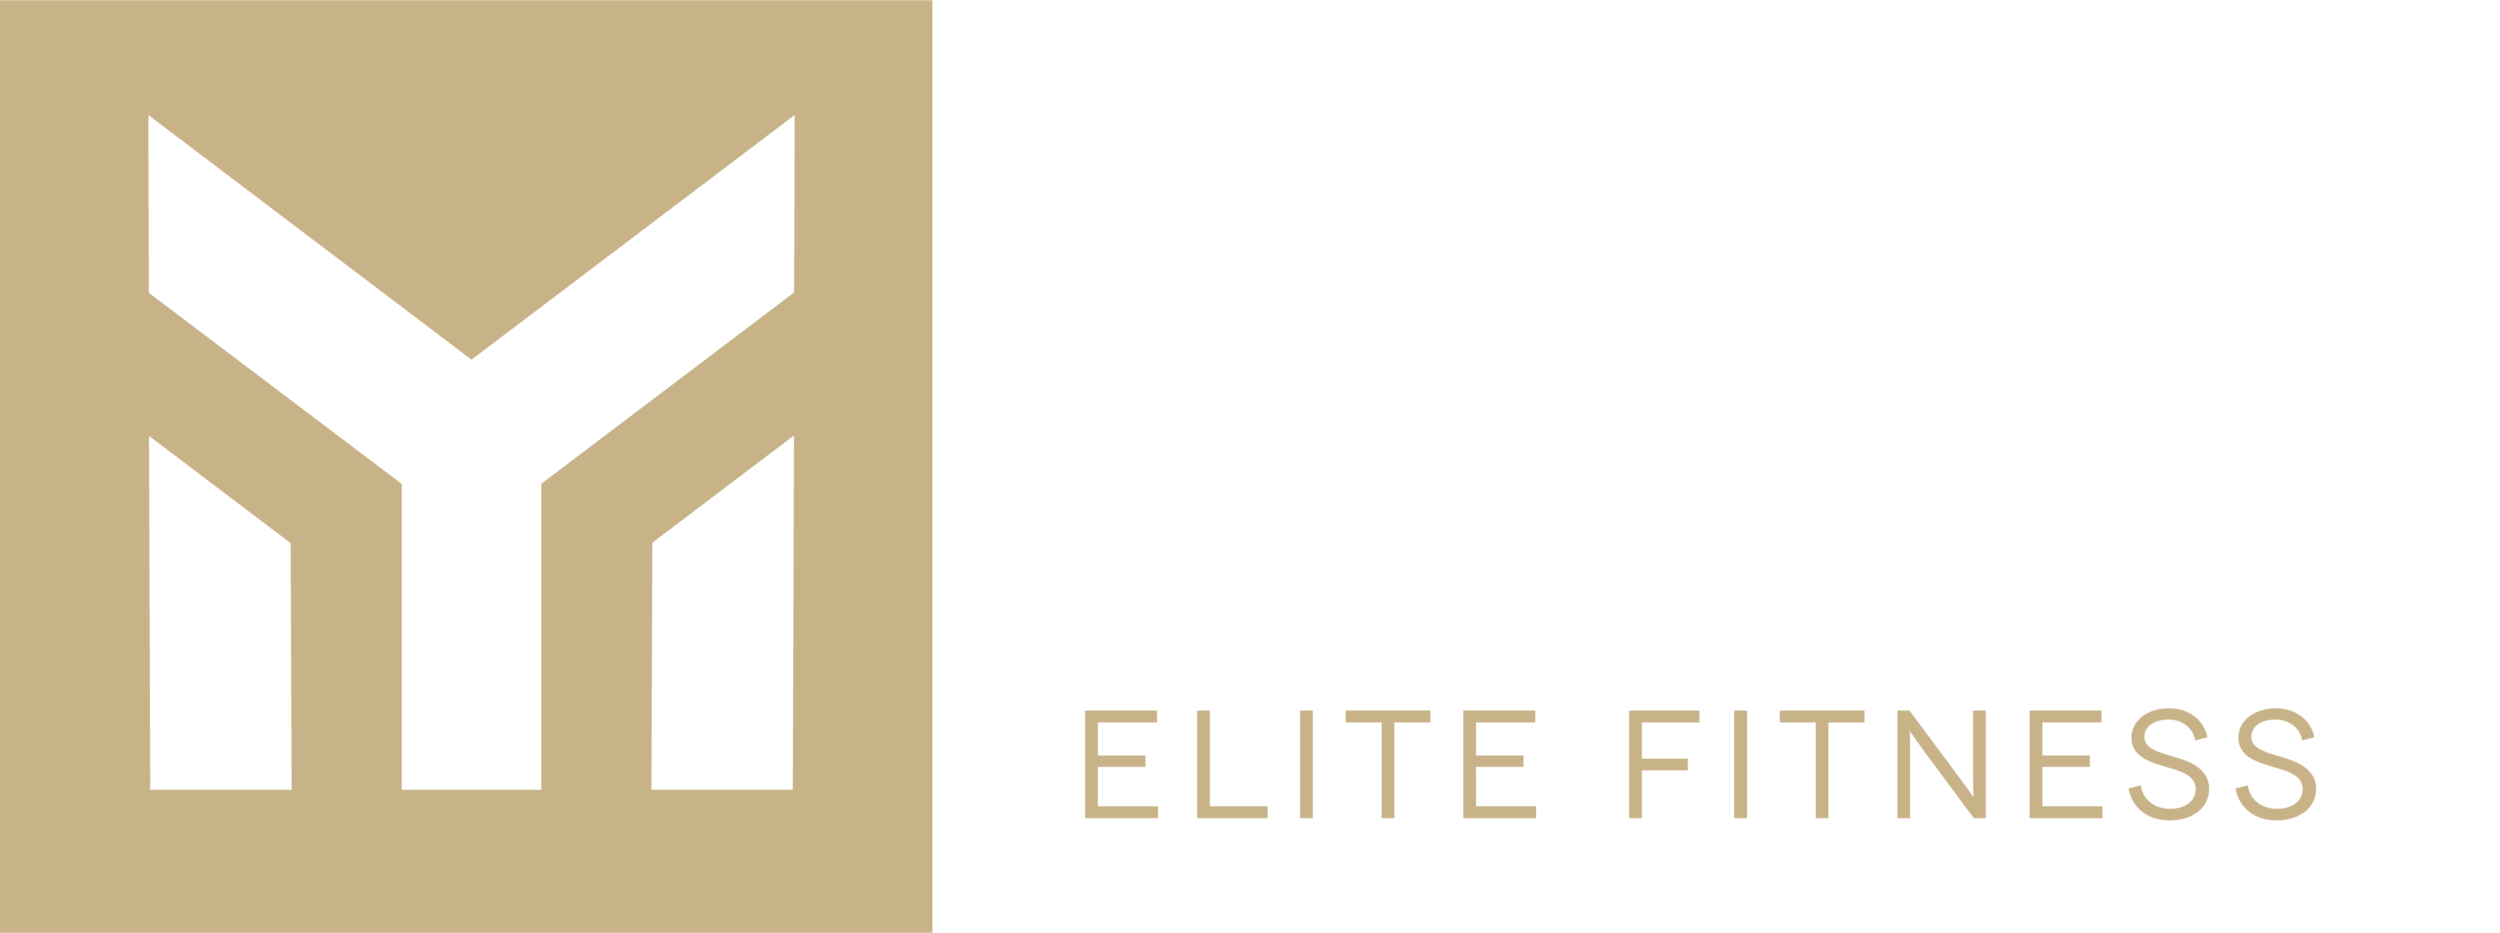 Martin Yabsley Elite Fitness